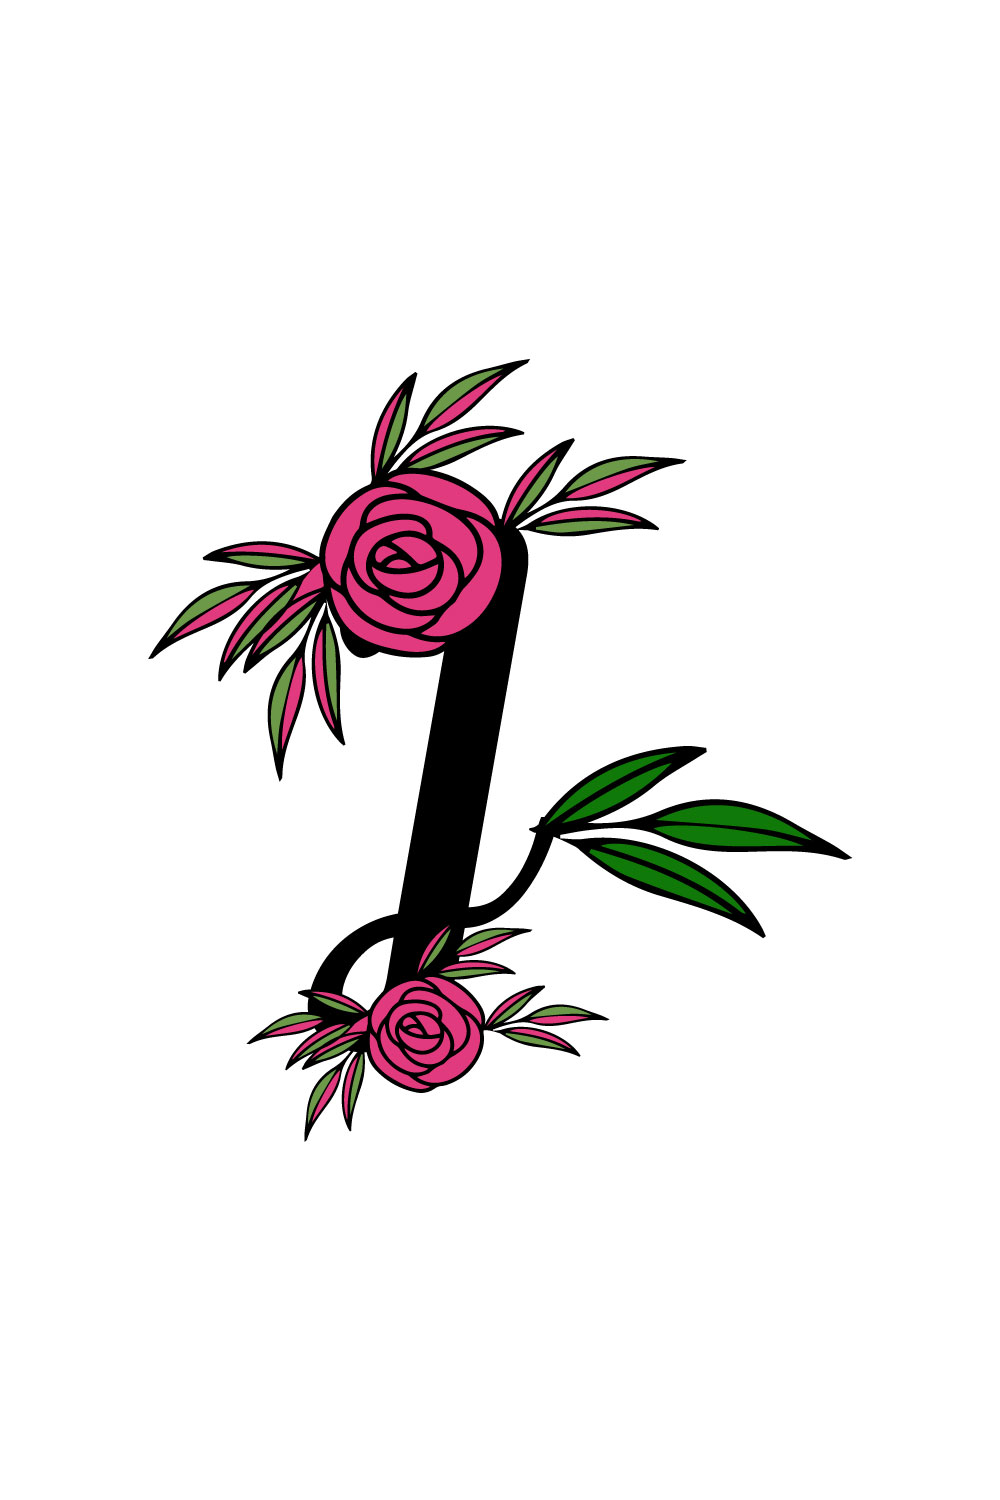 Free Rose J letter logo pinterest preview image.